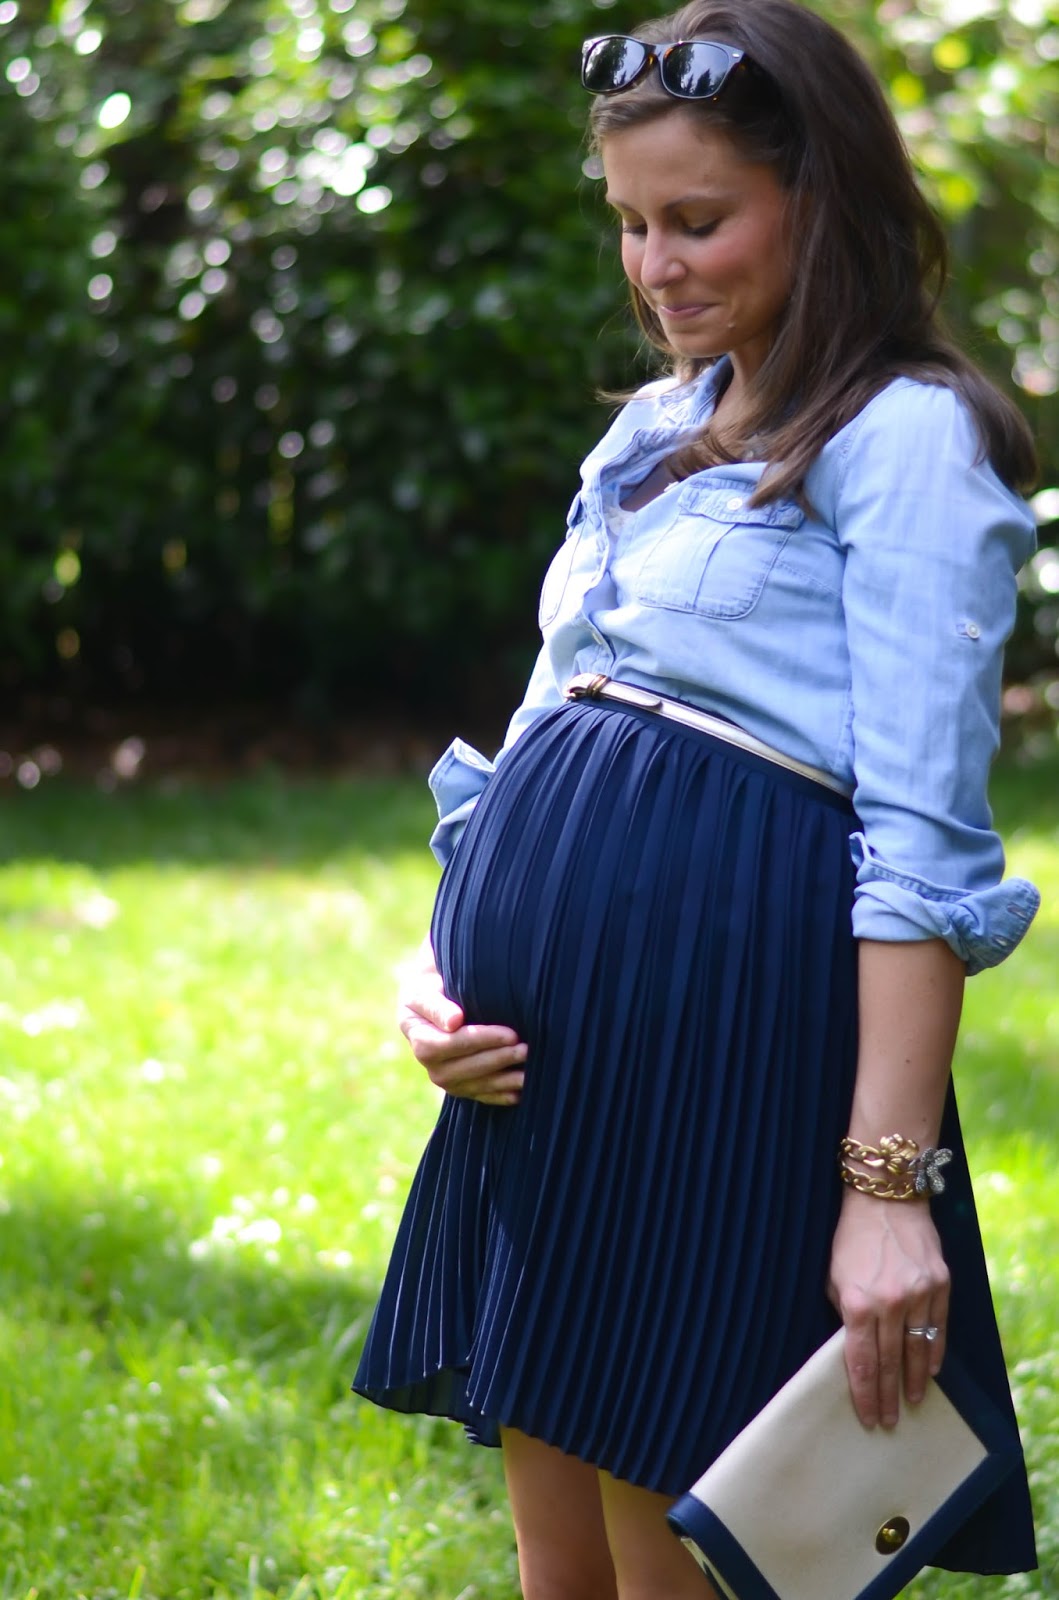 IRON & TWINE: 21 Weeks Pregnant | Twins